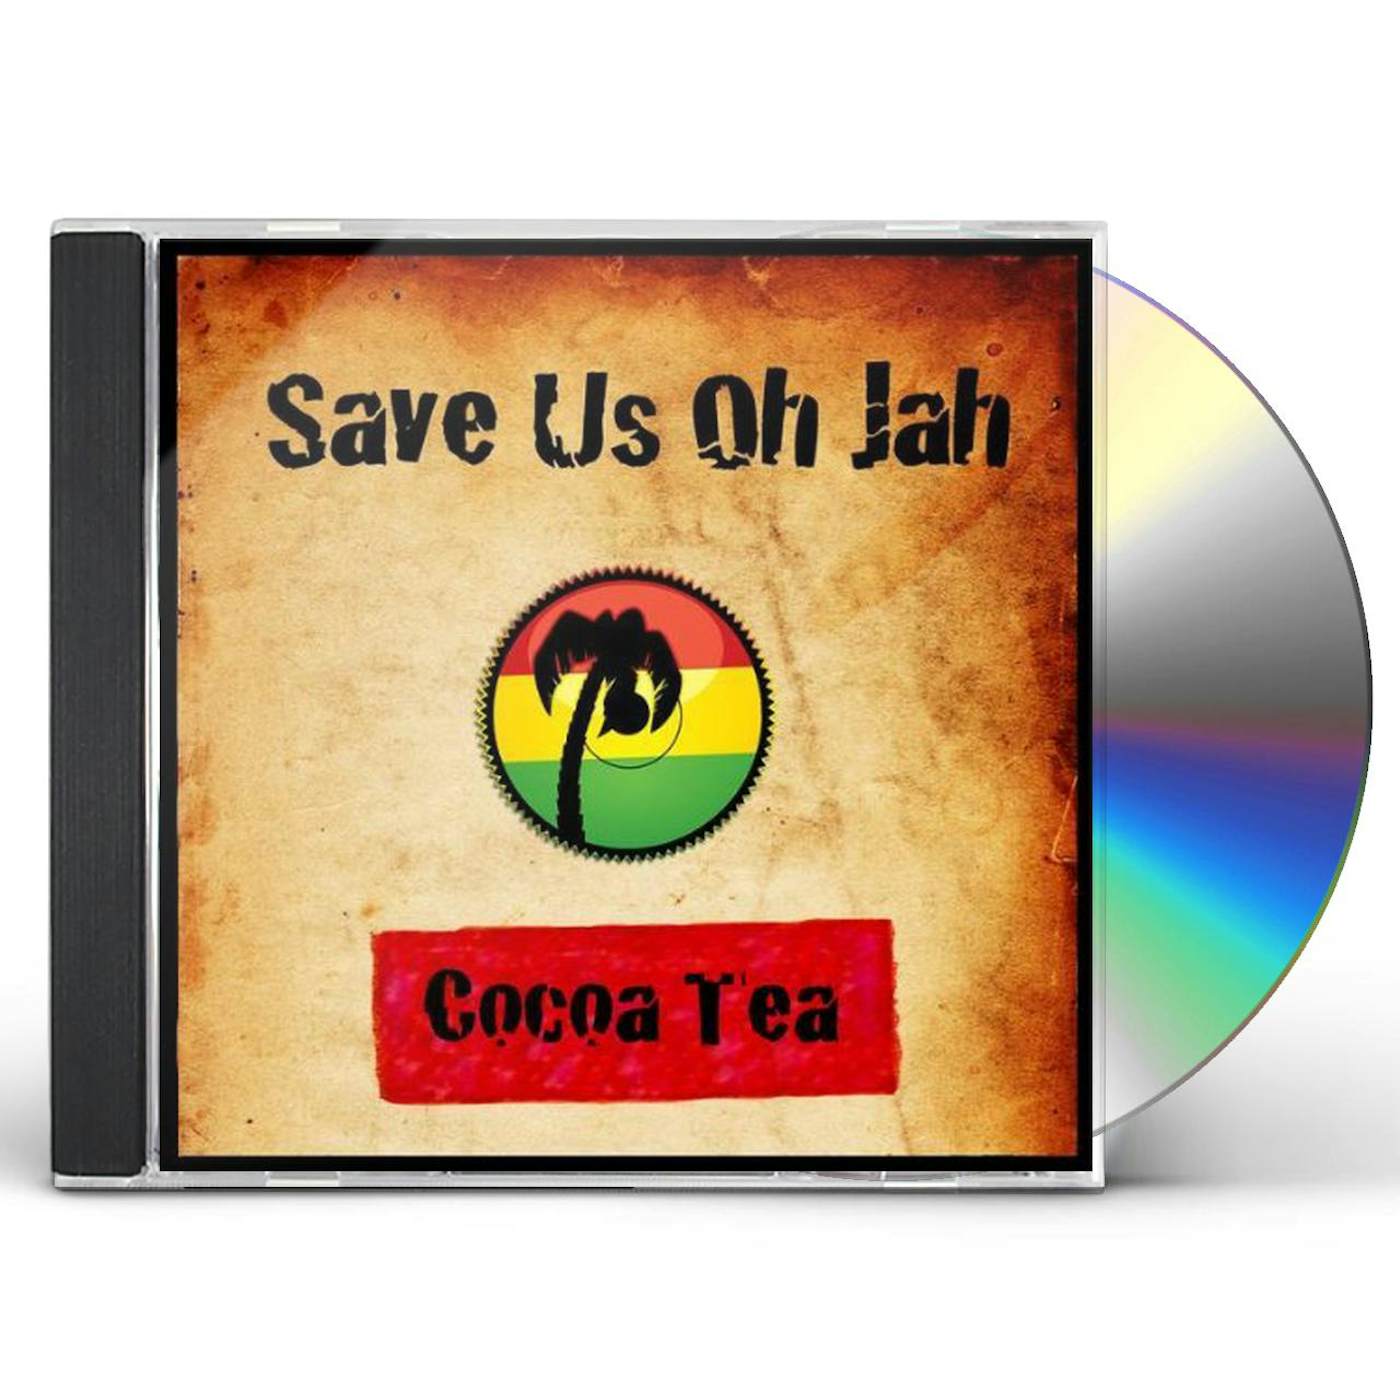 Cocoa Tea SAVE US OH JAH CD